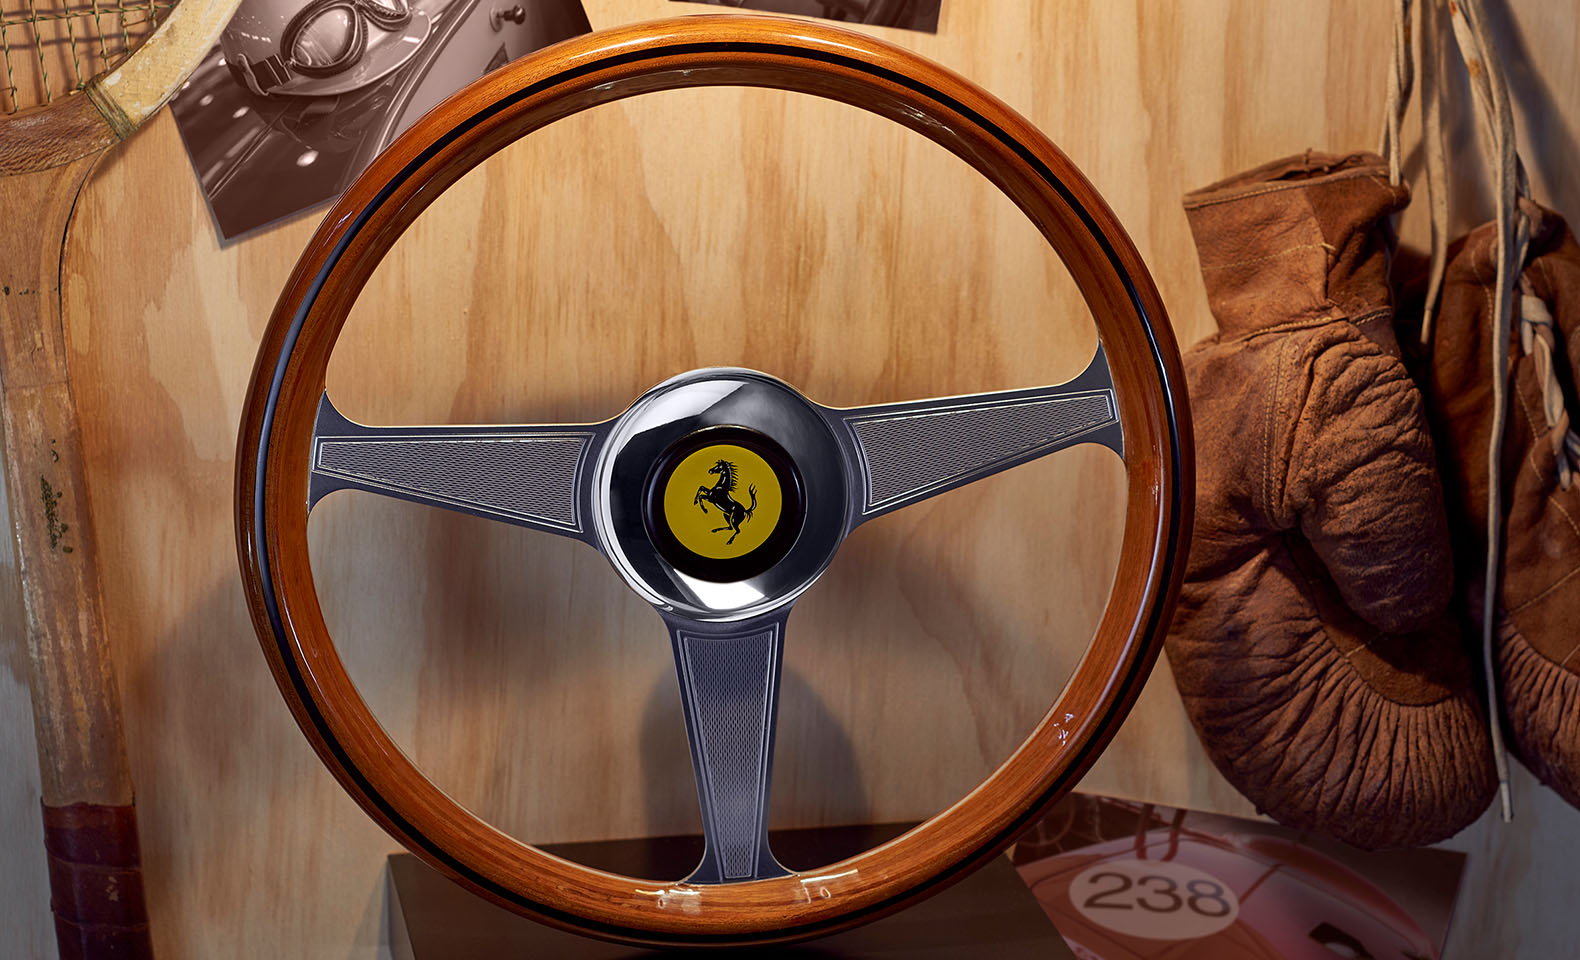 最新発見 Ferrari 250 GTO Wheel Add On並行輸入